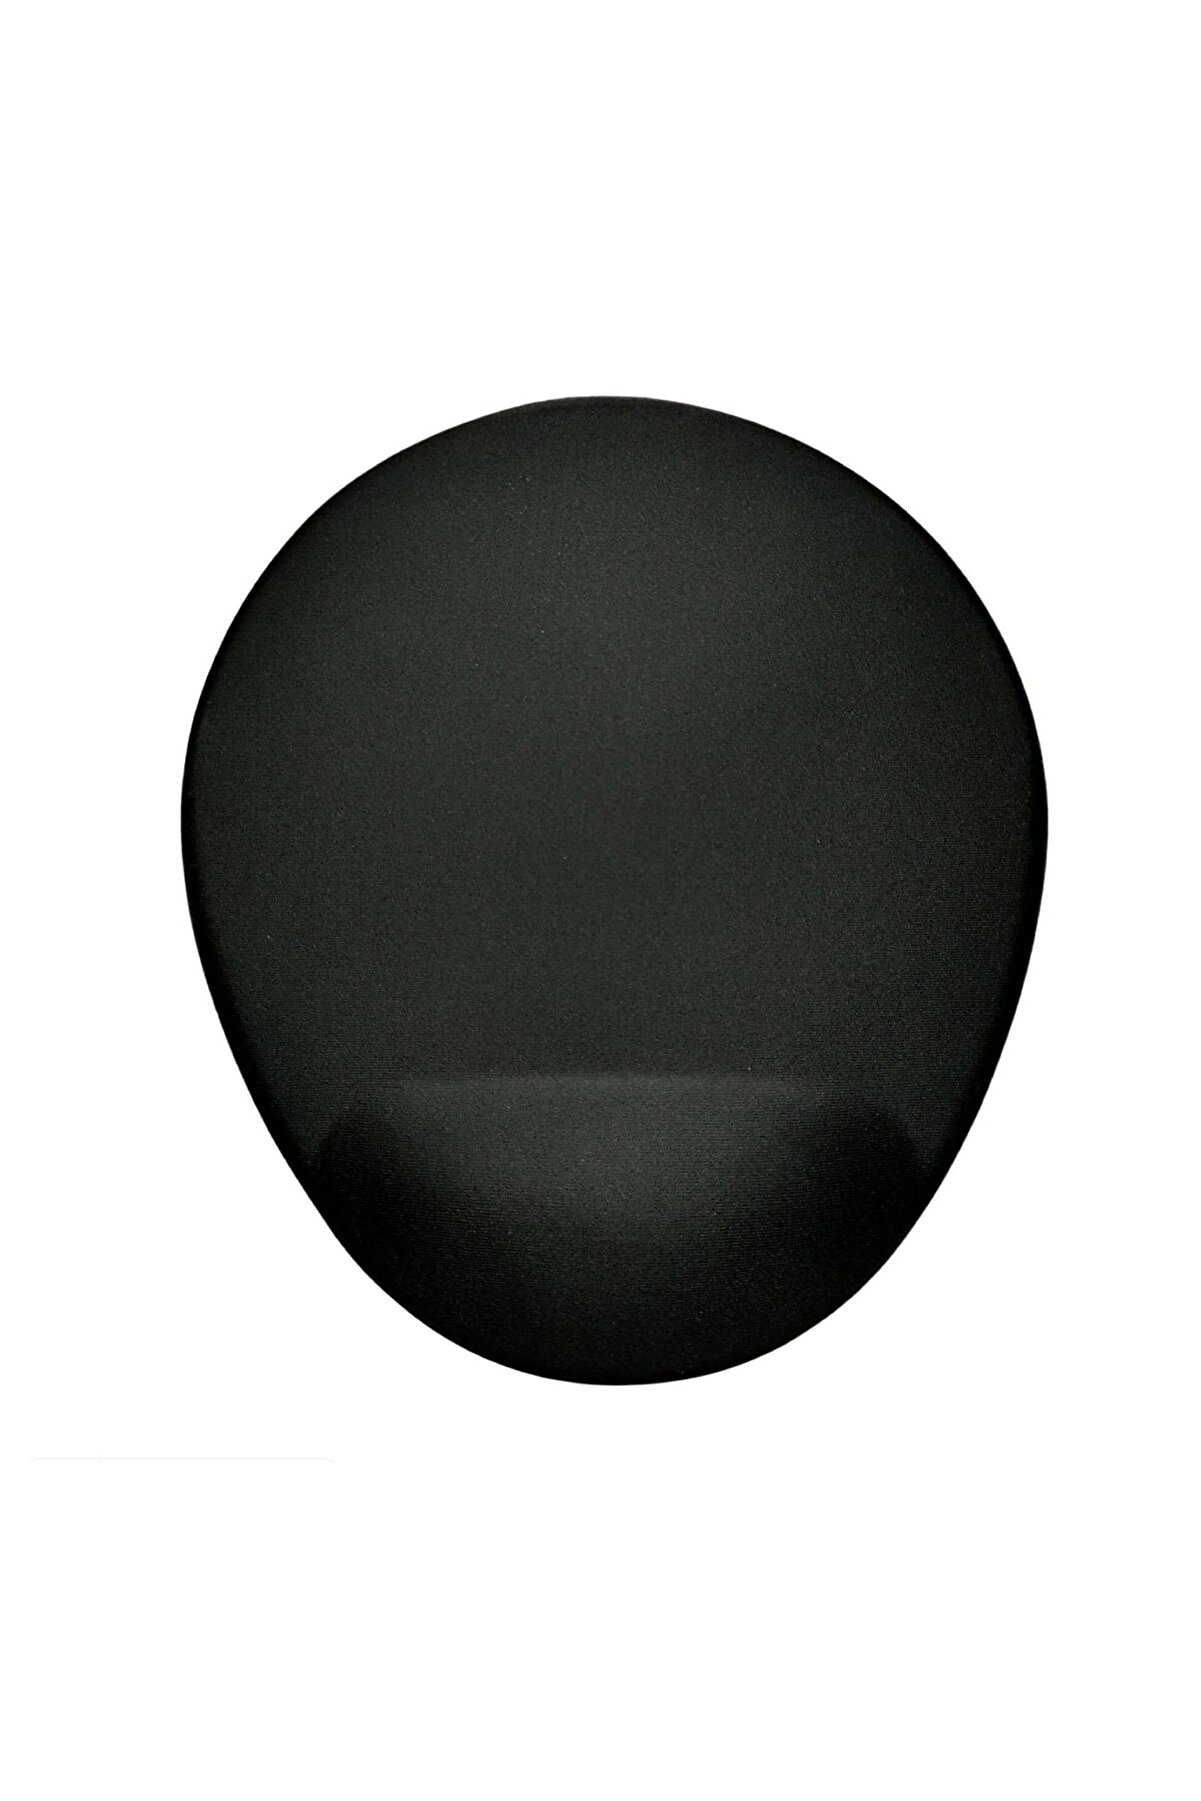 MAĞAZA DEPOM Bilek Destekli Mouse Pad - Siyah Oval Bileklikli Mousepad